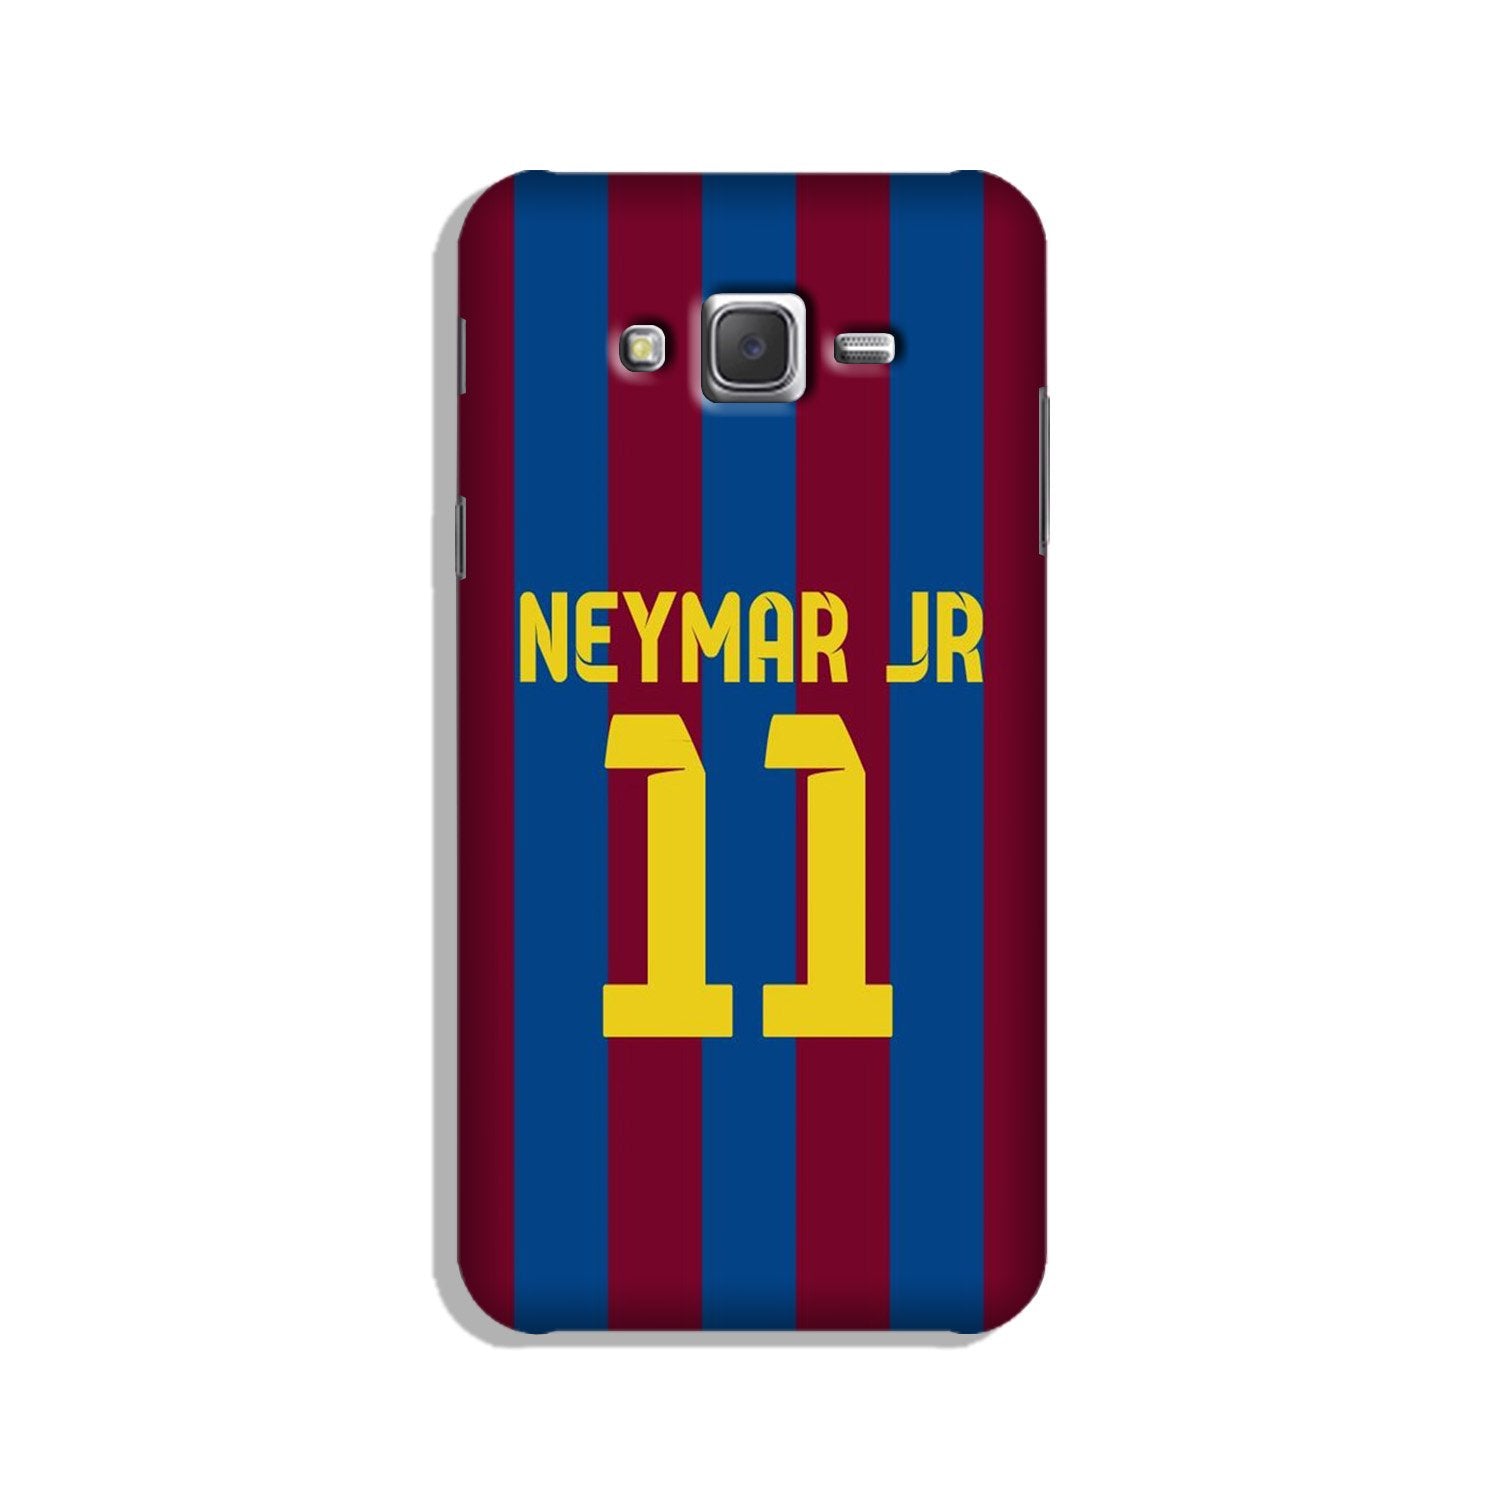 Neymar Jr Case for Galaxy J7 Nxt  (Design - 162)